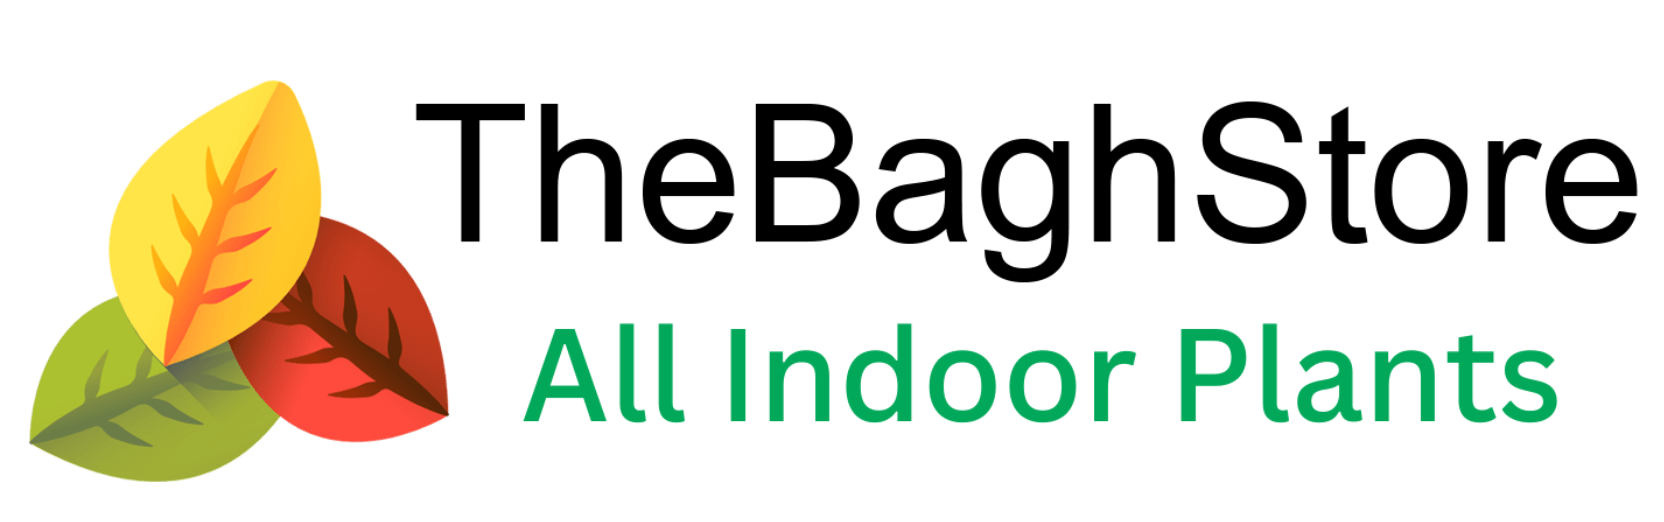 TheBaghstore - All Indoor Plants